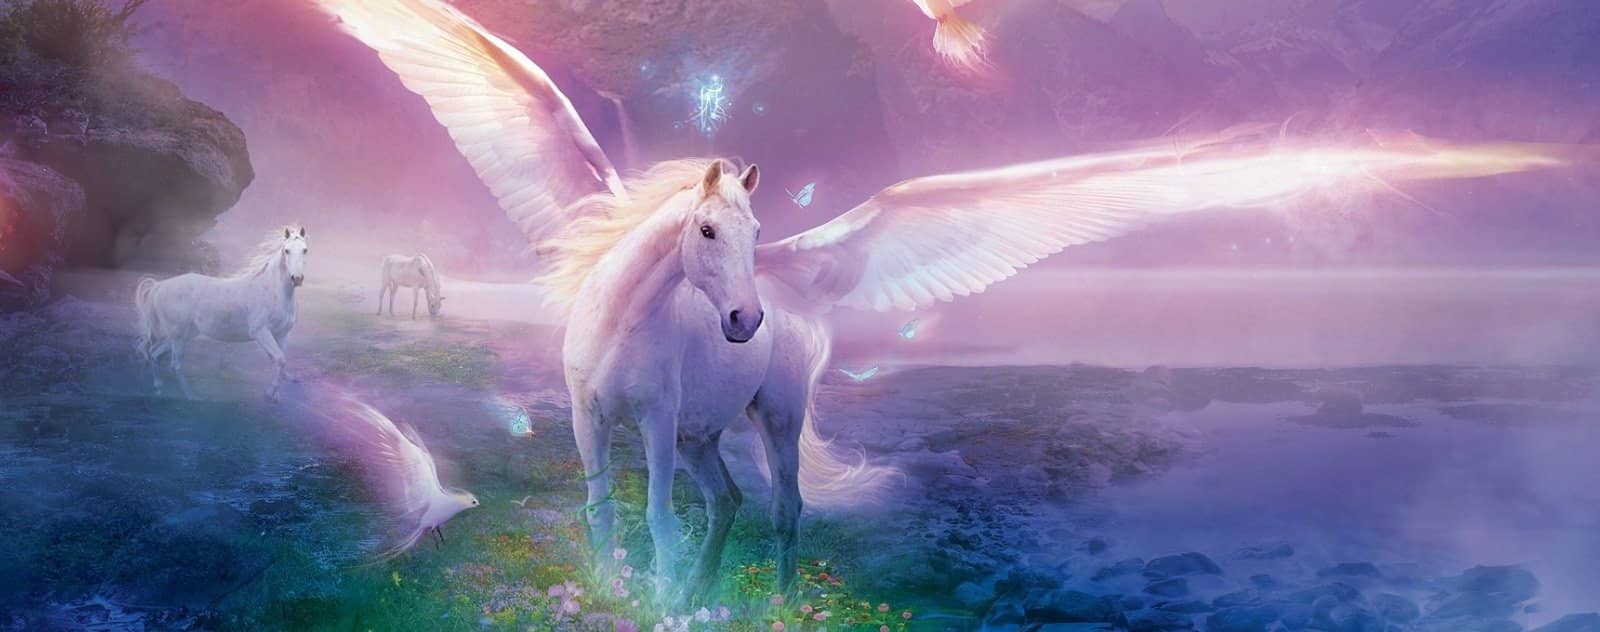 Pegasus-Symbolik